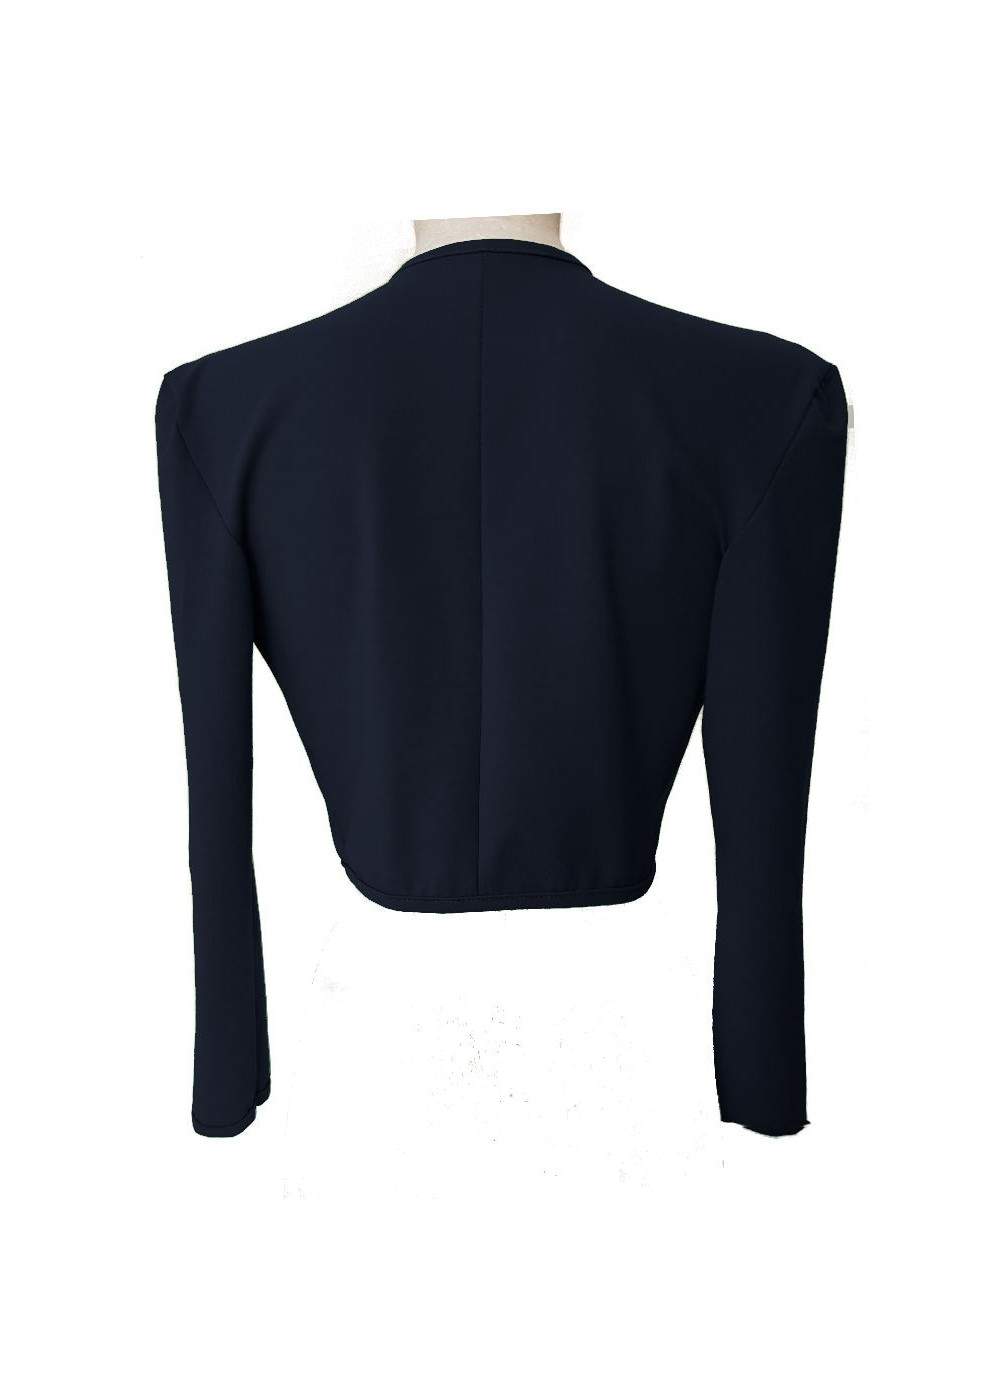 Size 34 - 52 Blue Cotton Stretch Short Jacket from Magdeburg Produc... - Deutsche Produktion